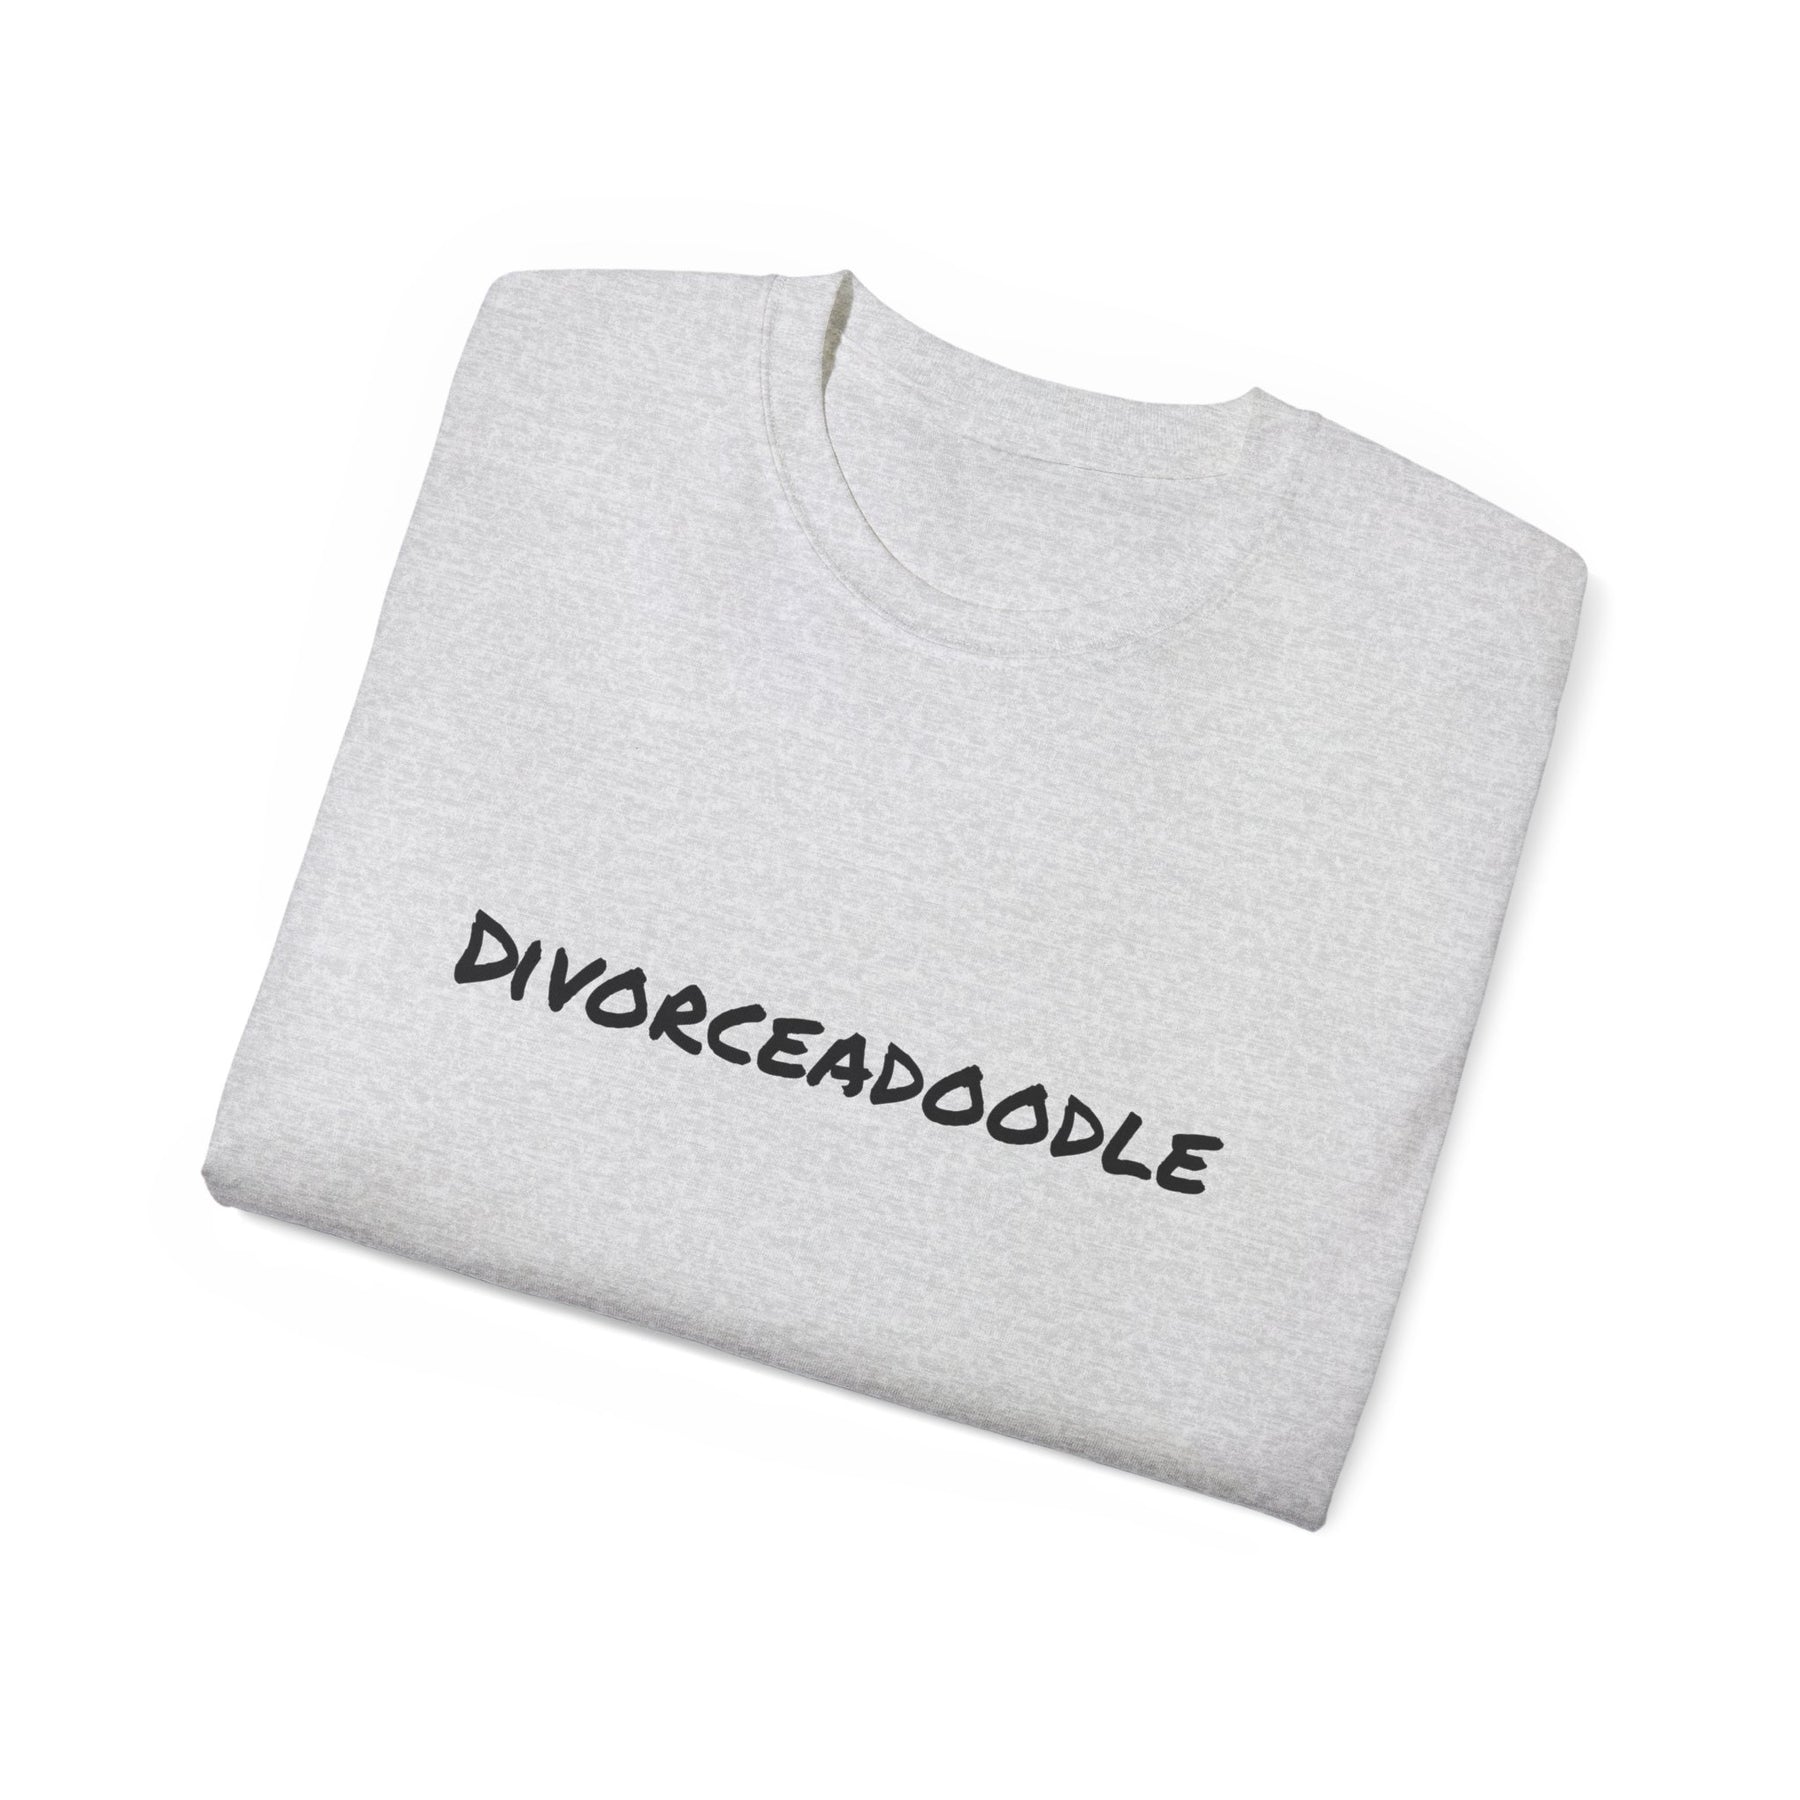 "Divorceadoodle" Jest in Bad Taste original (Unisex Tee)